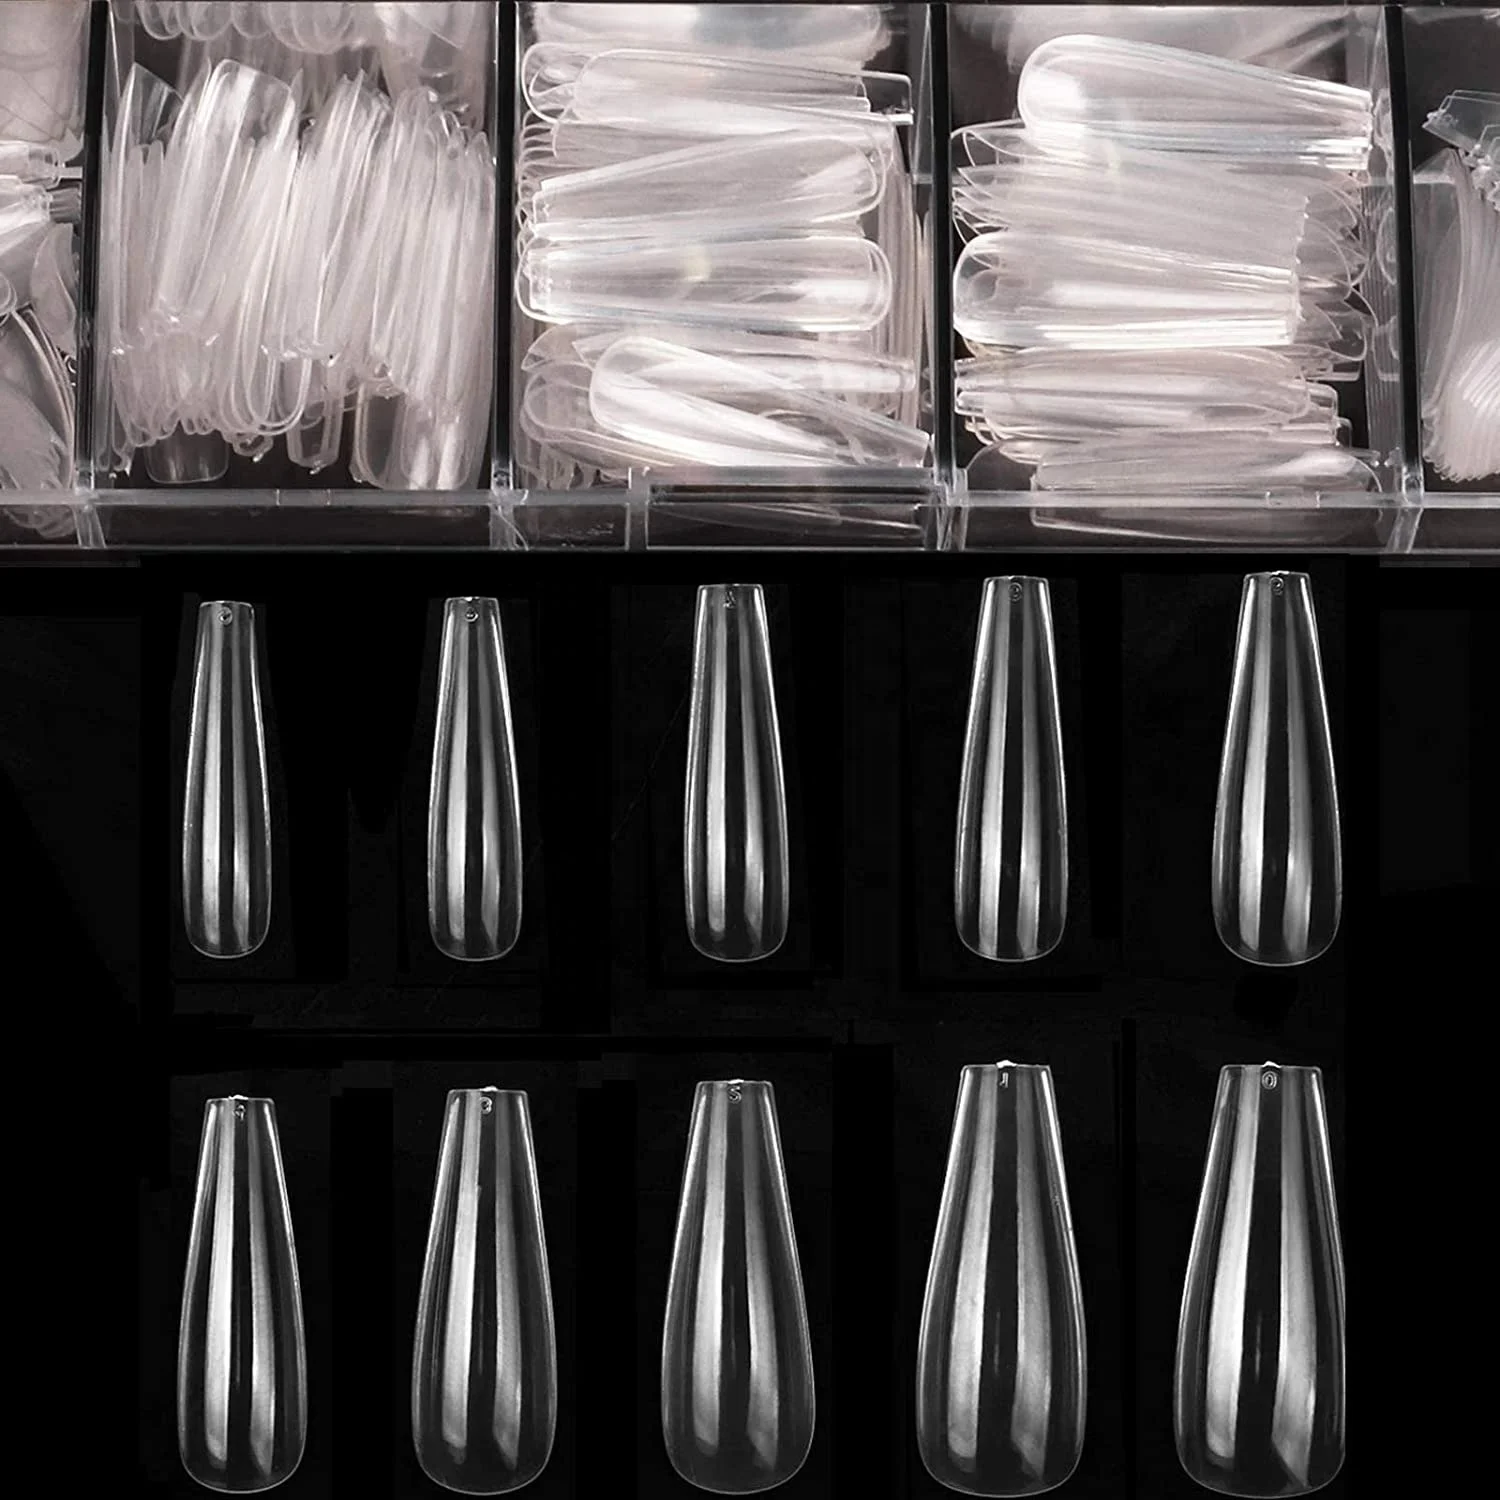 

500pcs Long Clear Acrylic Nails Coffin Shaped Ballerina Nails Tips Full Cover False acrylic artificial nails